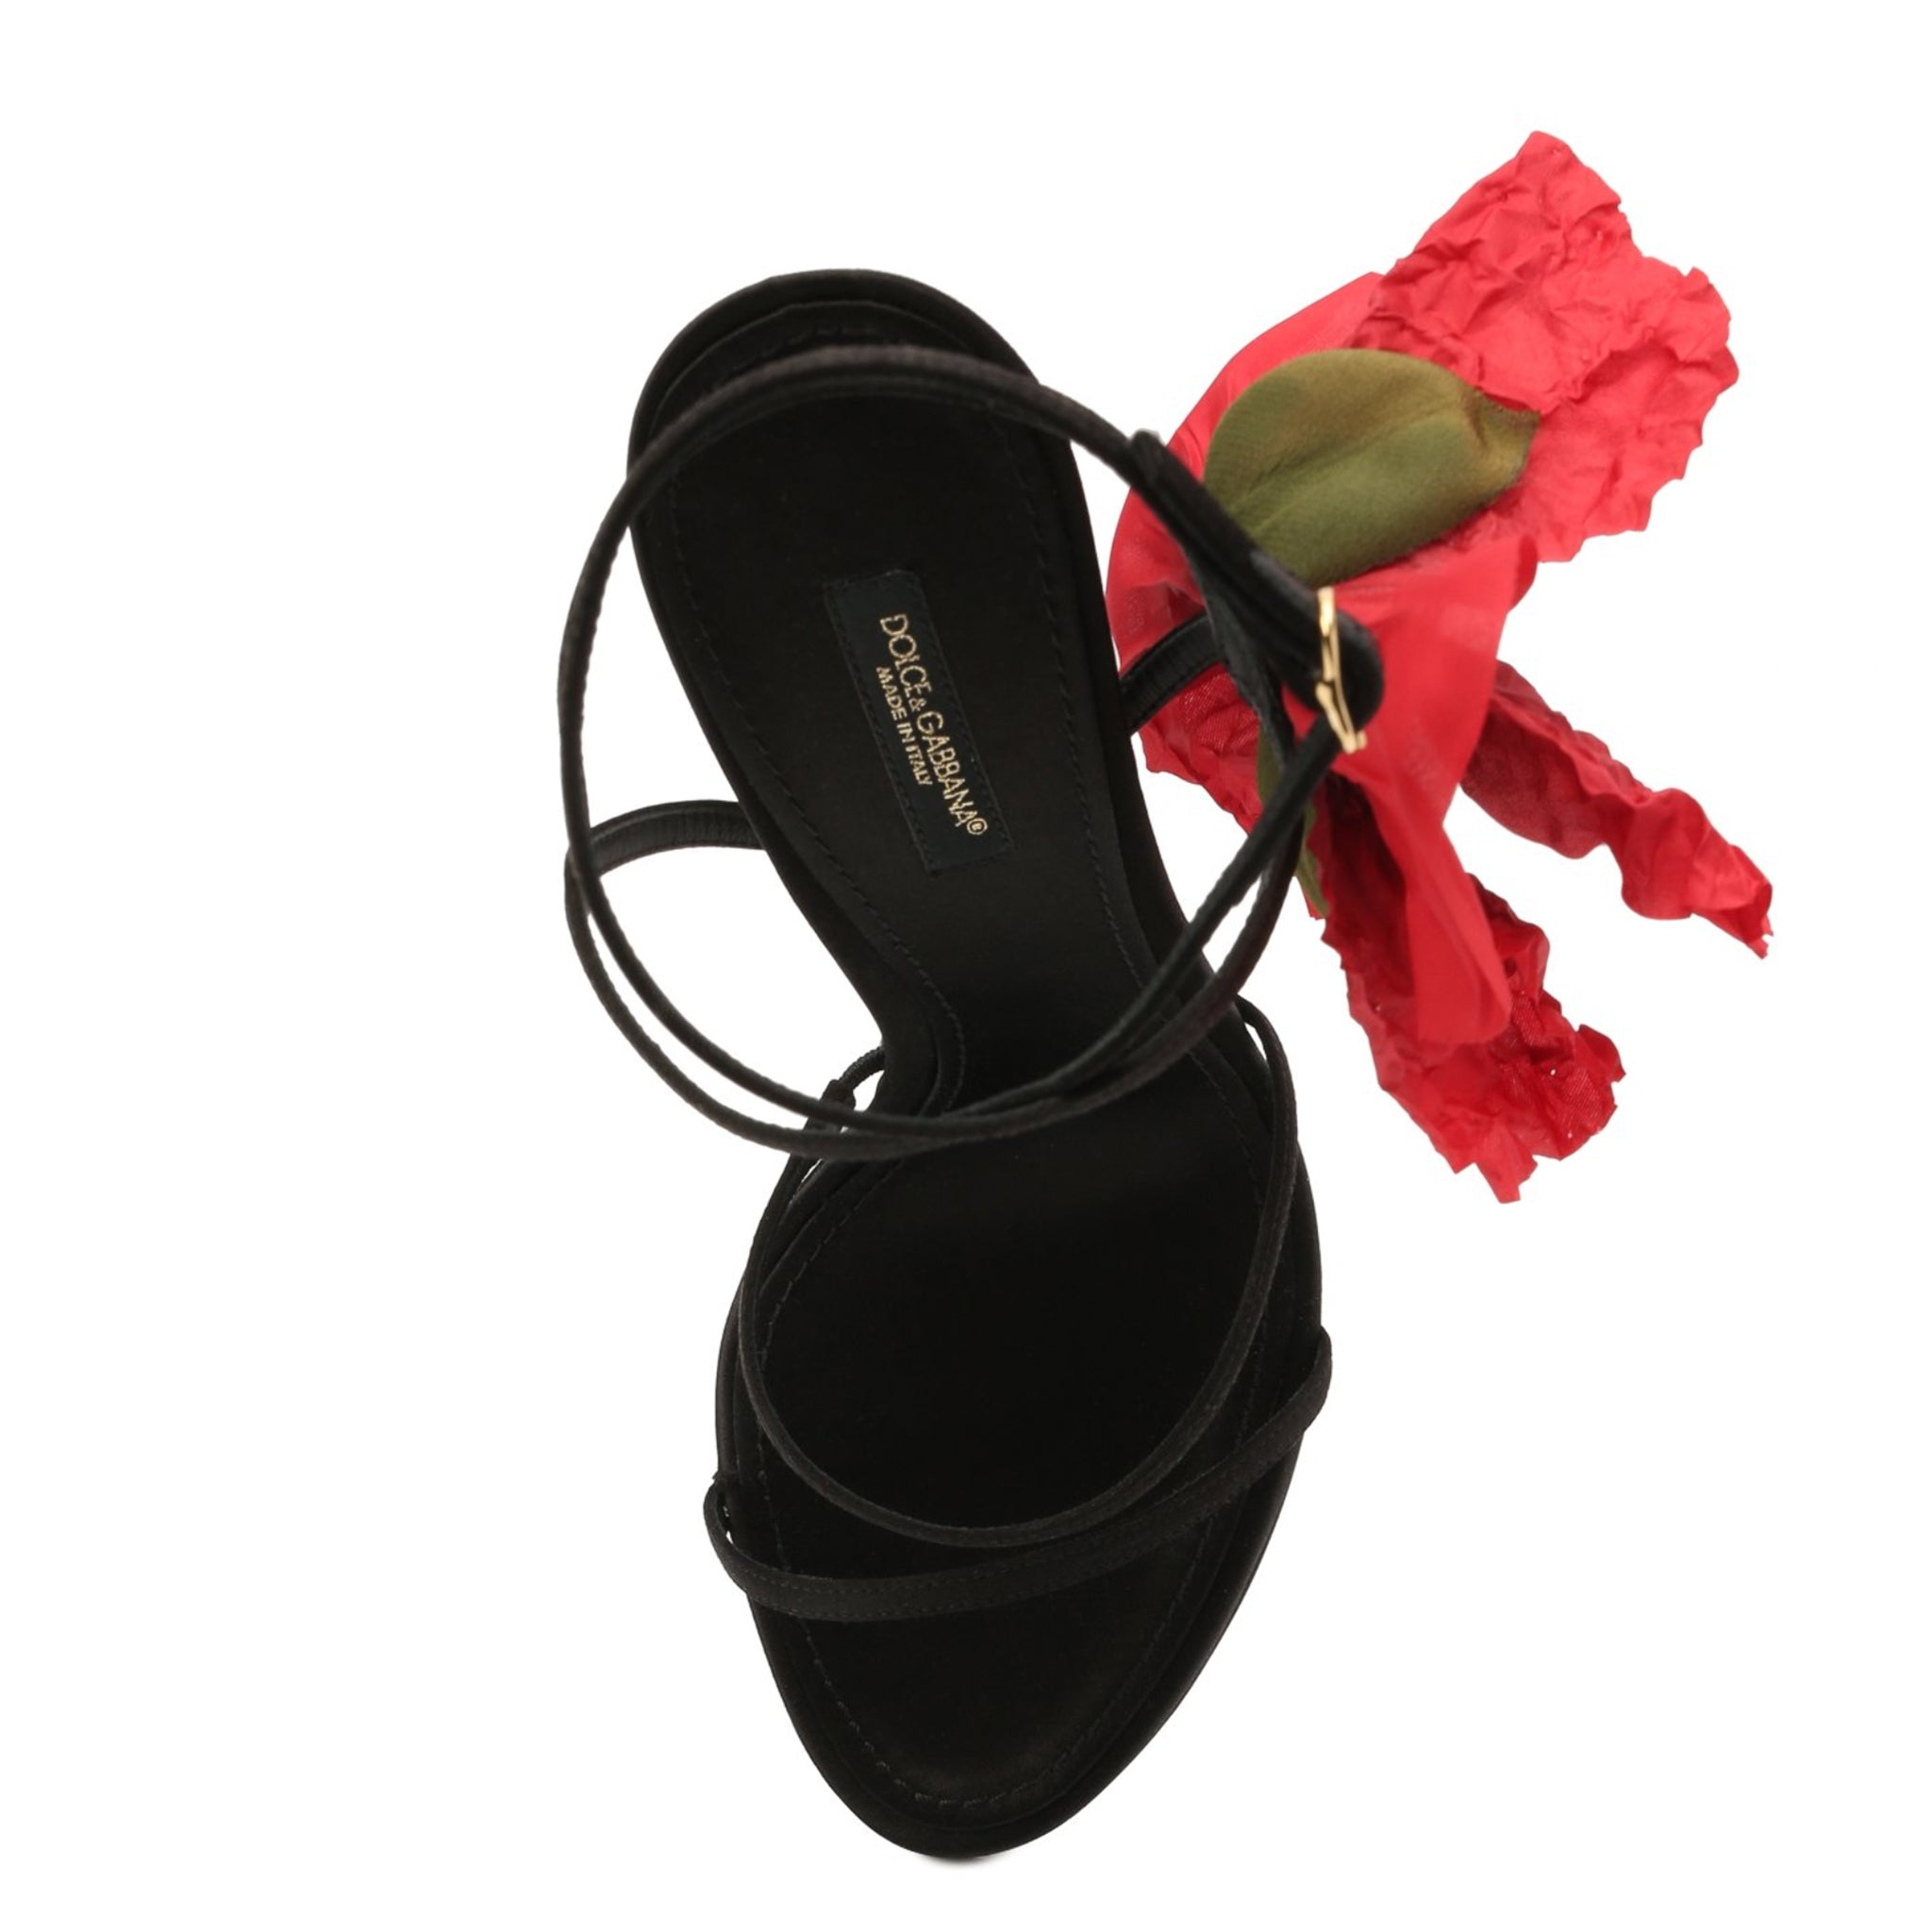 DOLCE-GABBANA-OUTLET-SALE-Dolce-Gabbana-Keira-Sandals-Sandalen-ARCHIVE-COLLECTION-4.jpg